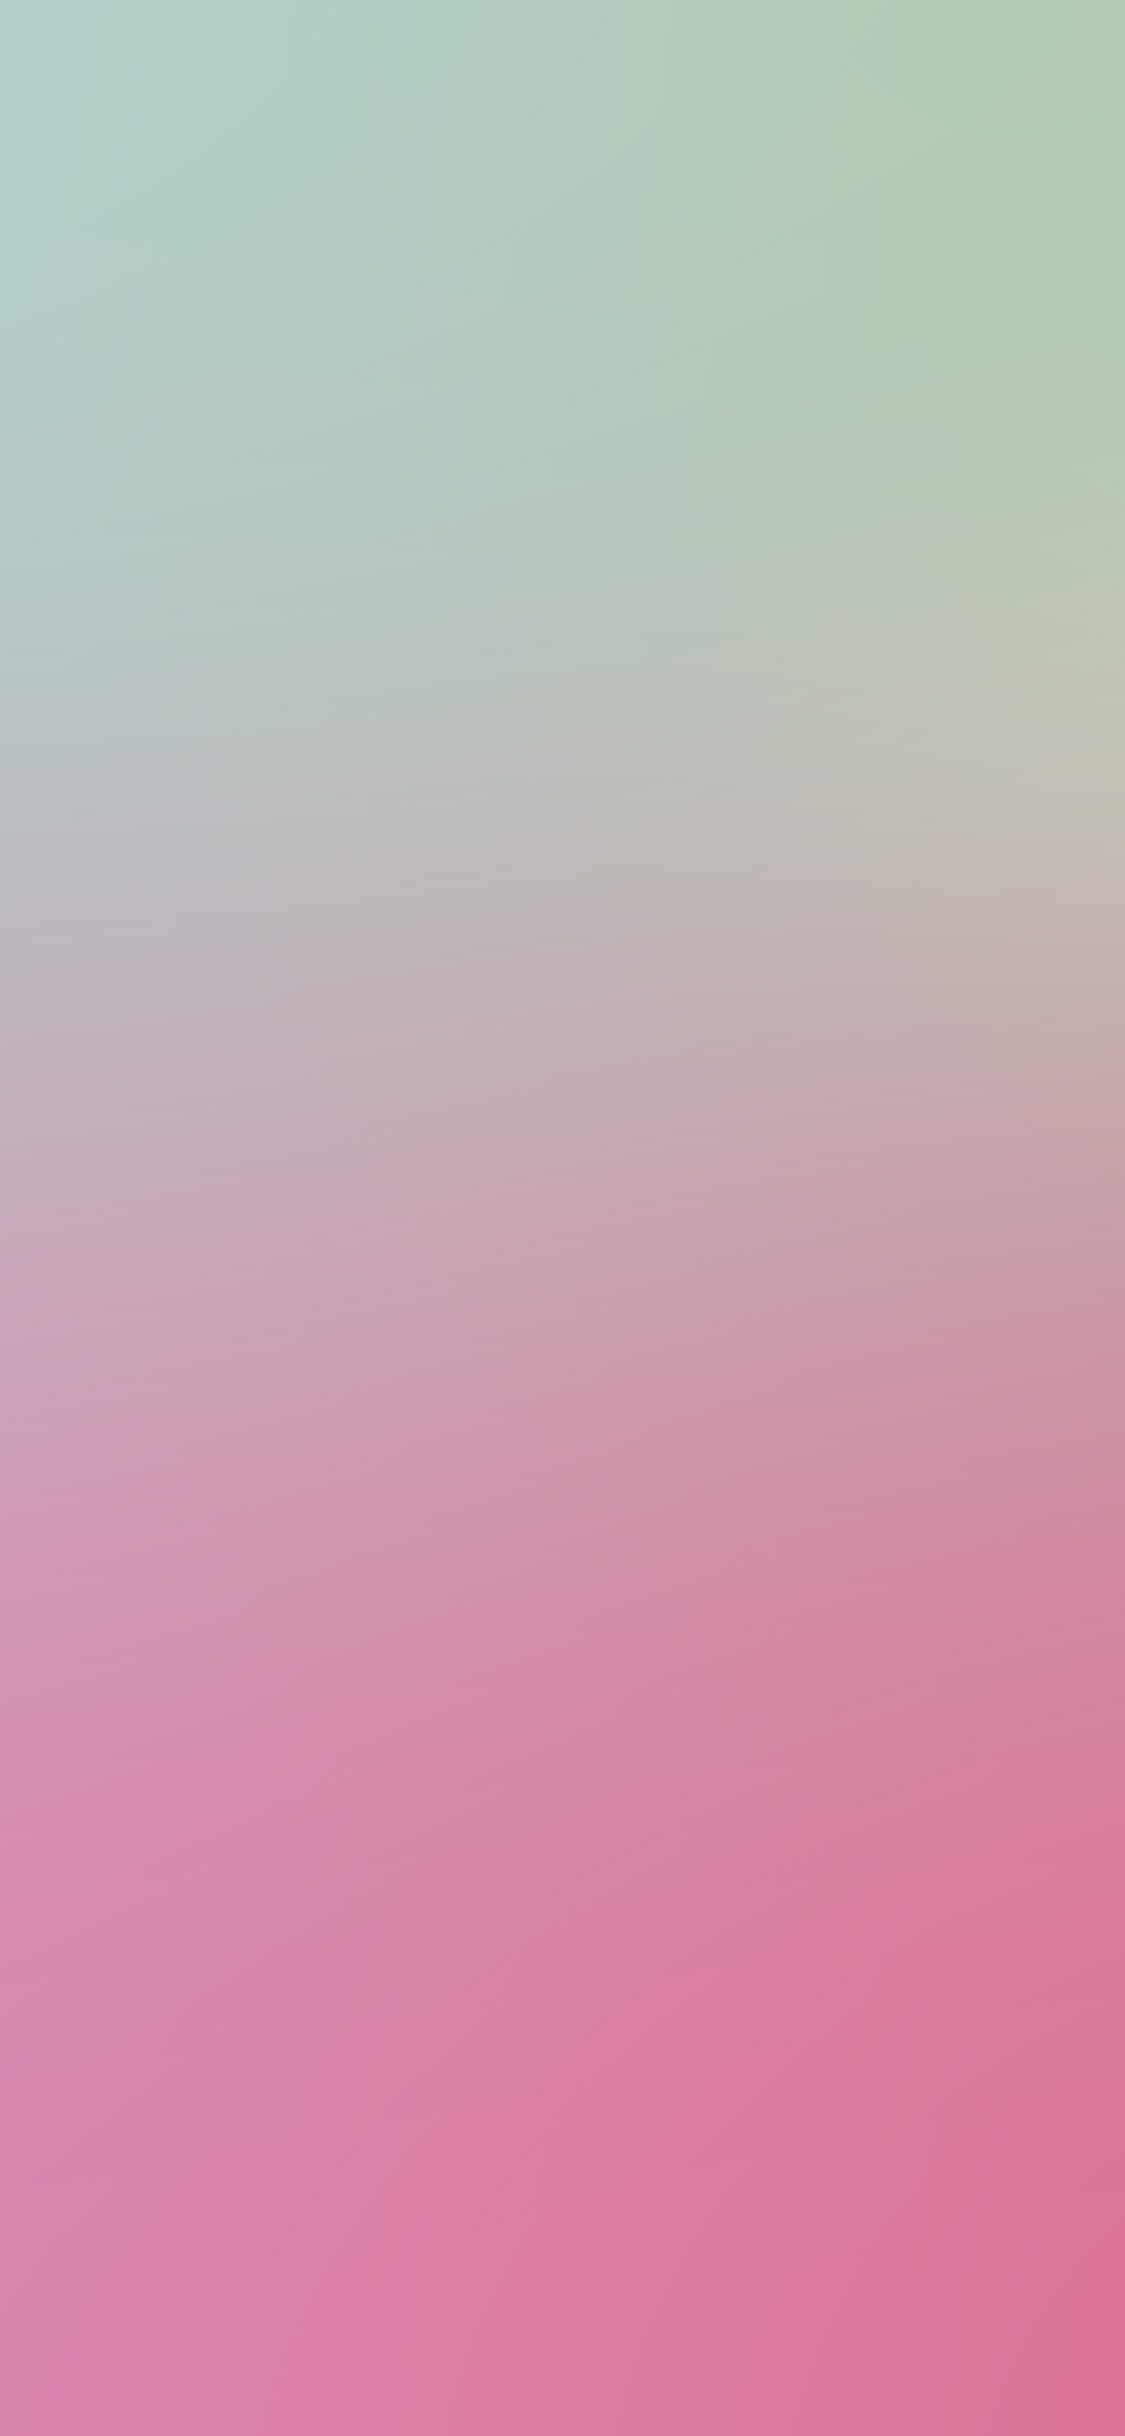 iPhone X wallpaper. red pink hotpink green blur gradation